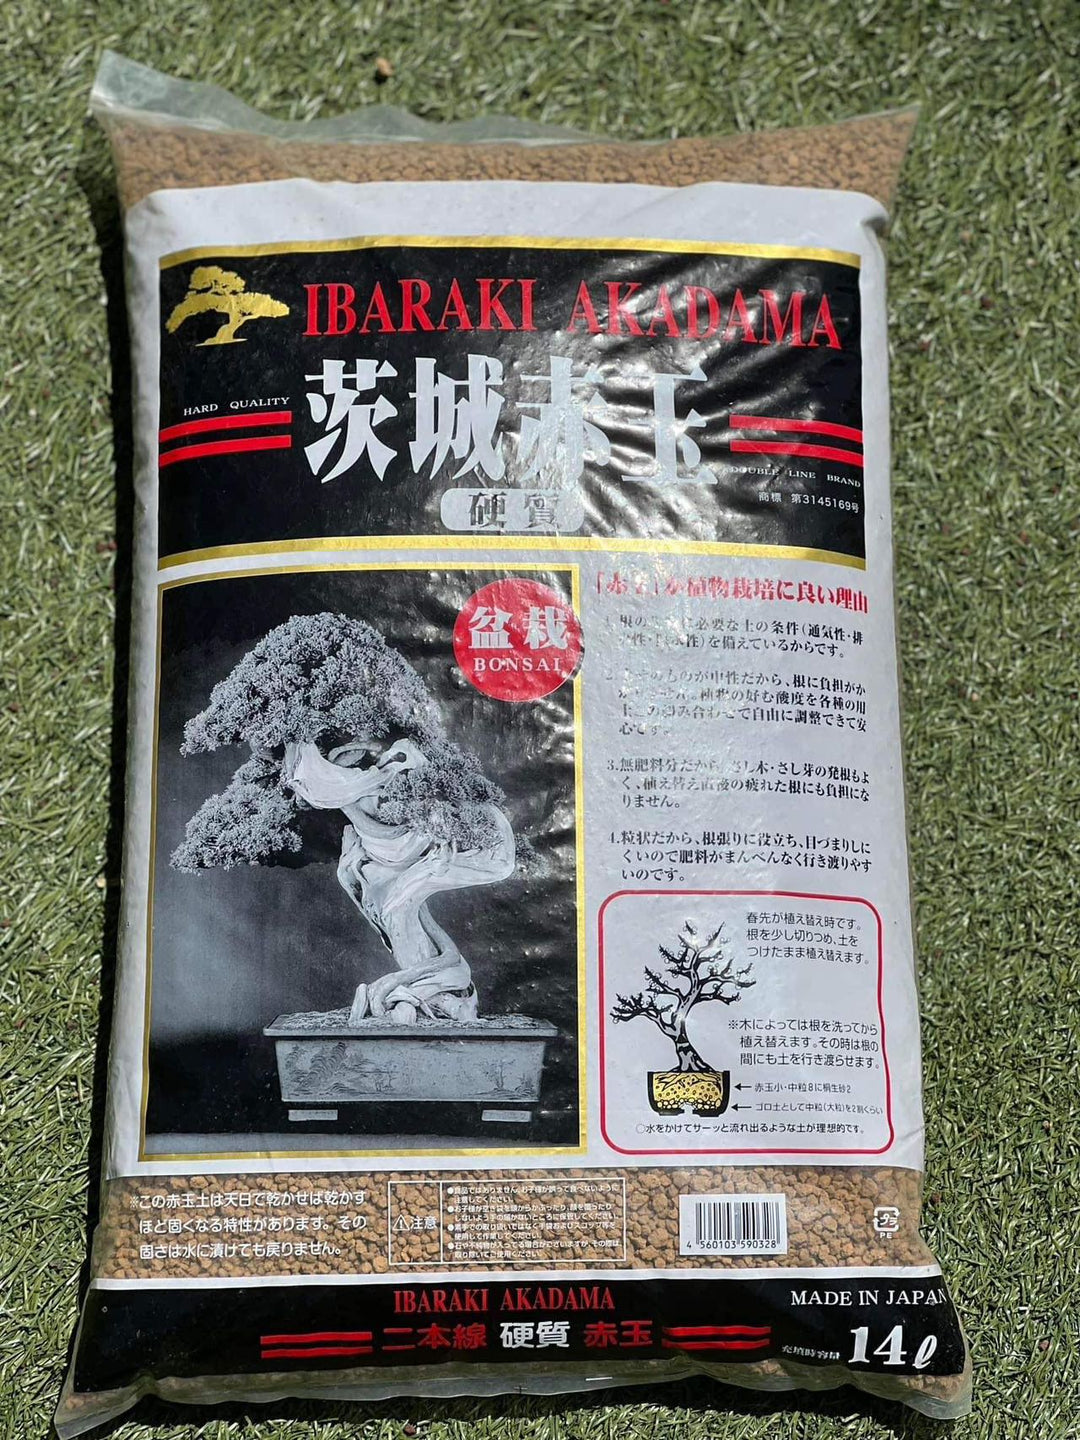 Ibaraki Akadama - Hard Akadama Made in Japan - 14L - Not Free Shipping